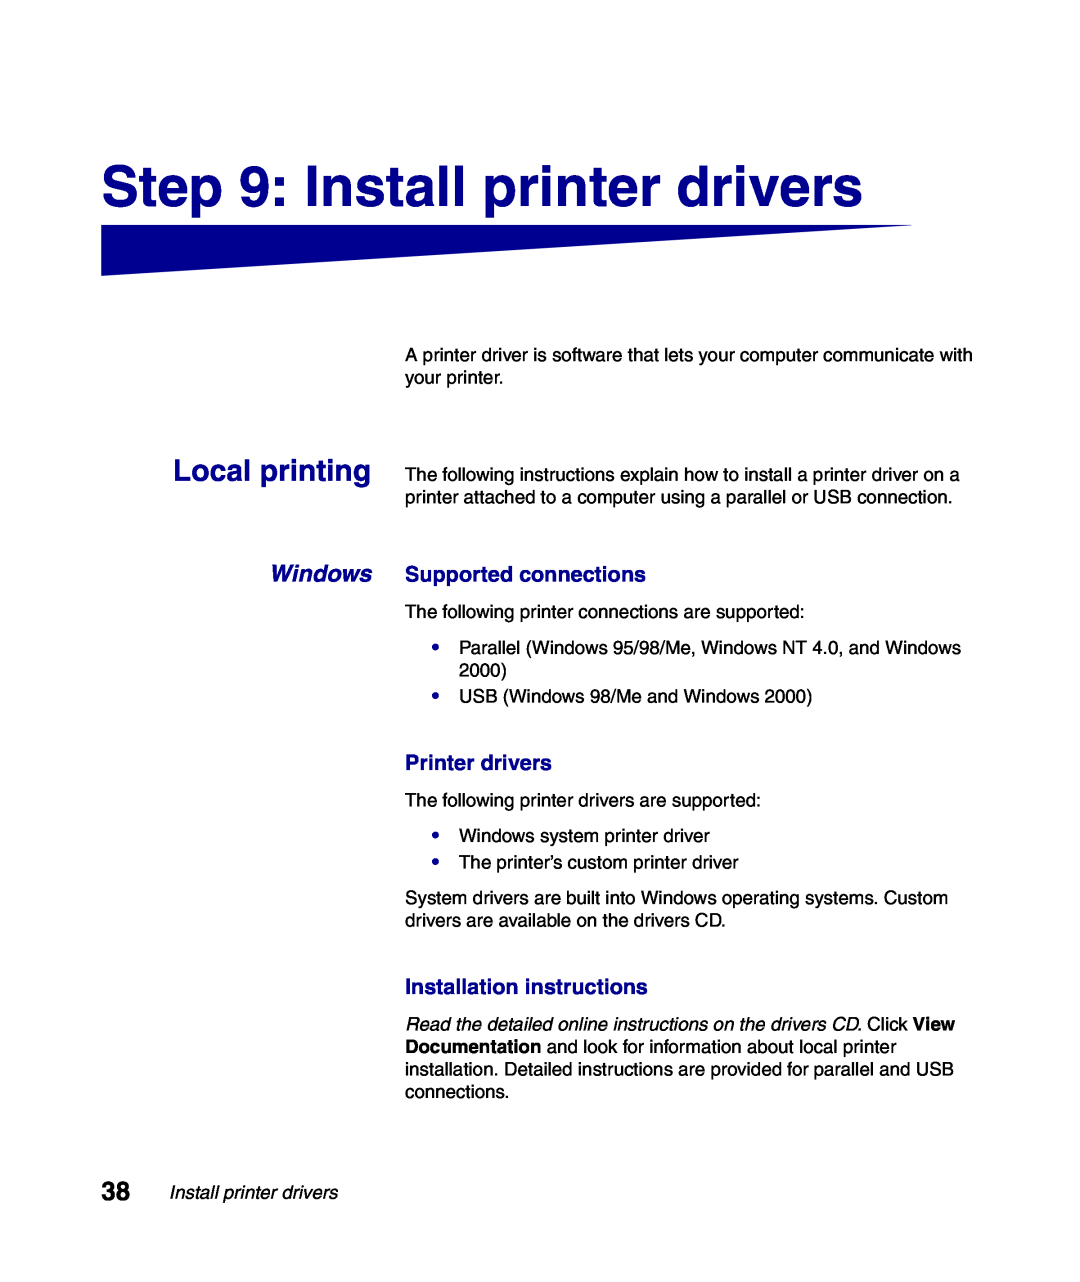 Lexmark Infoprint 1116 Install printer drivers, Windows Supported connections, Printer drivers, Installation instructions 